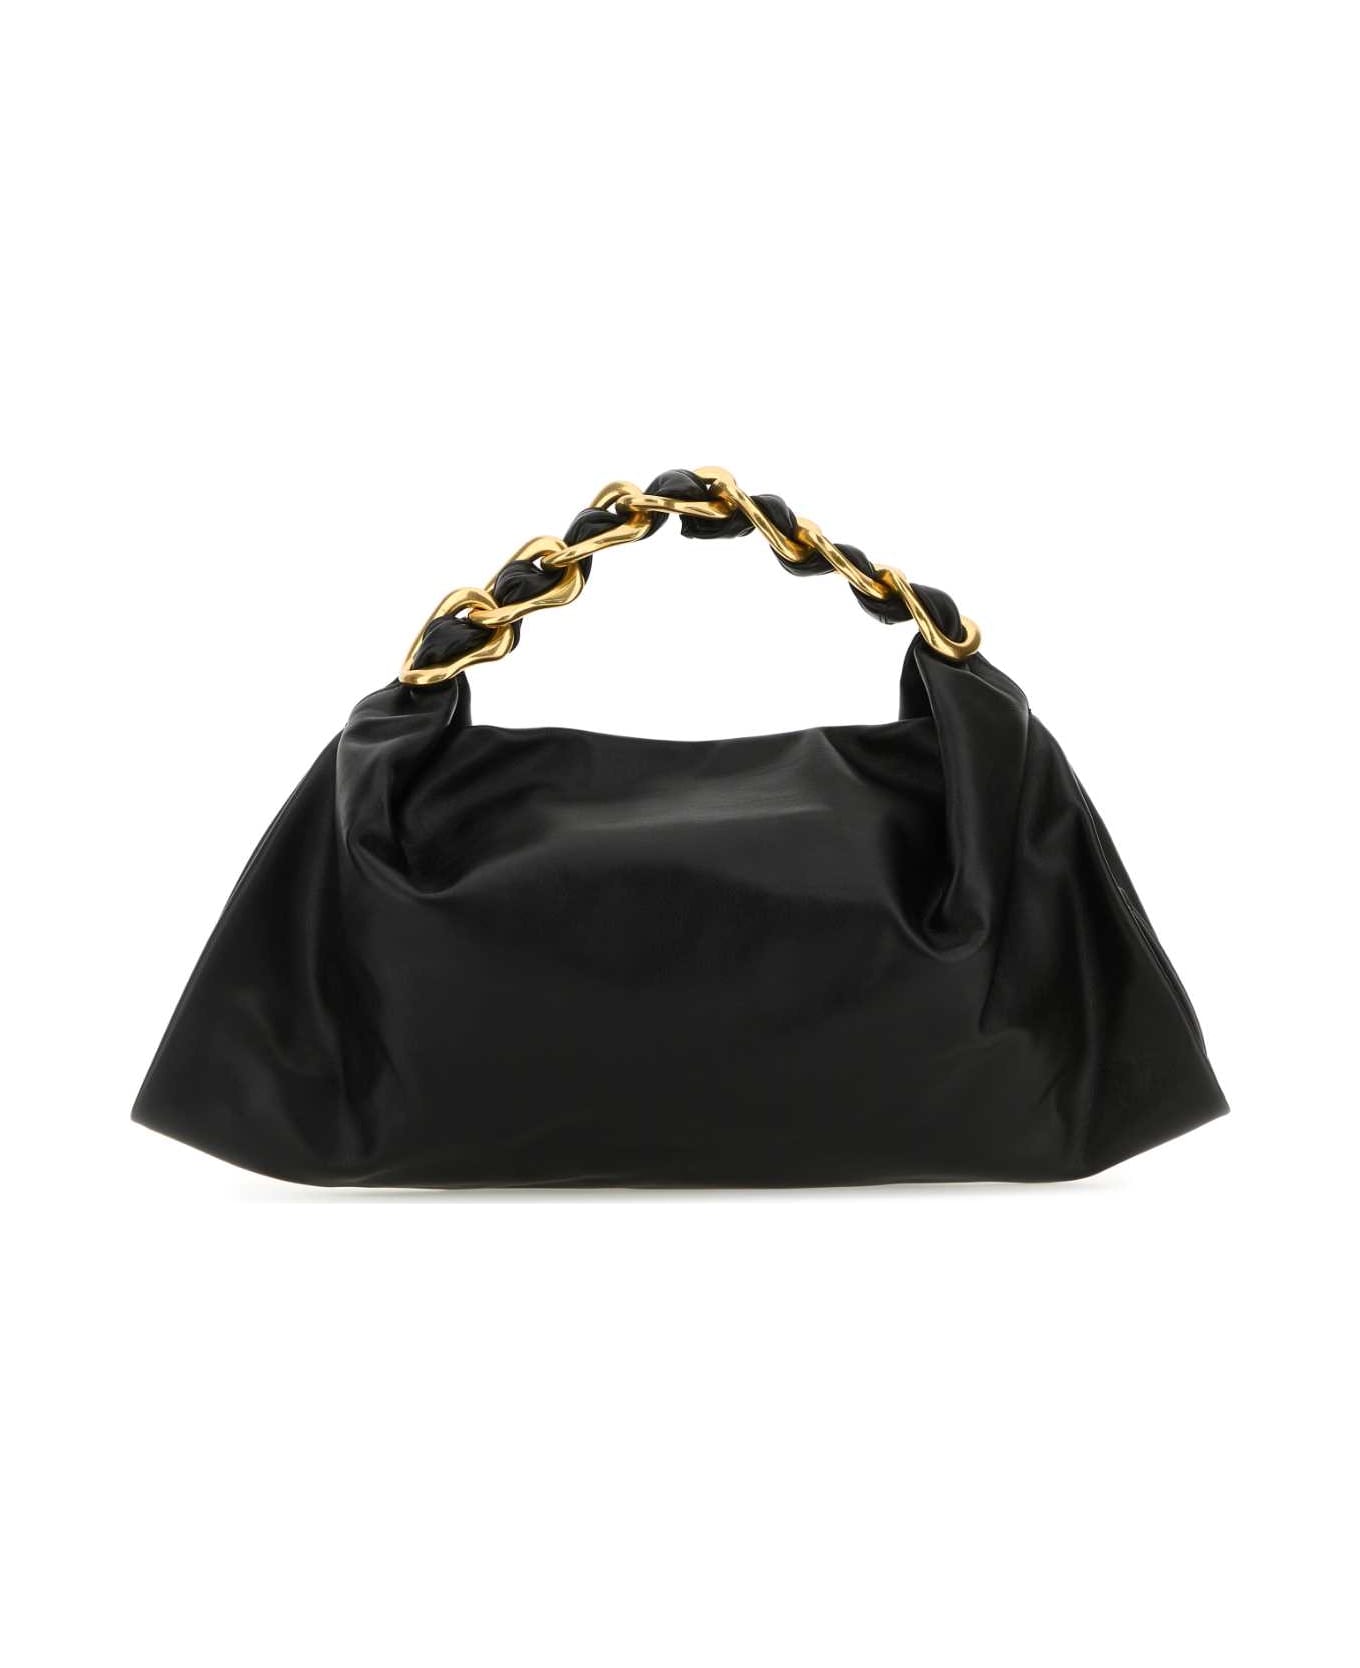 Burberry Black Leather Medium Swan Handbag - BLACK